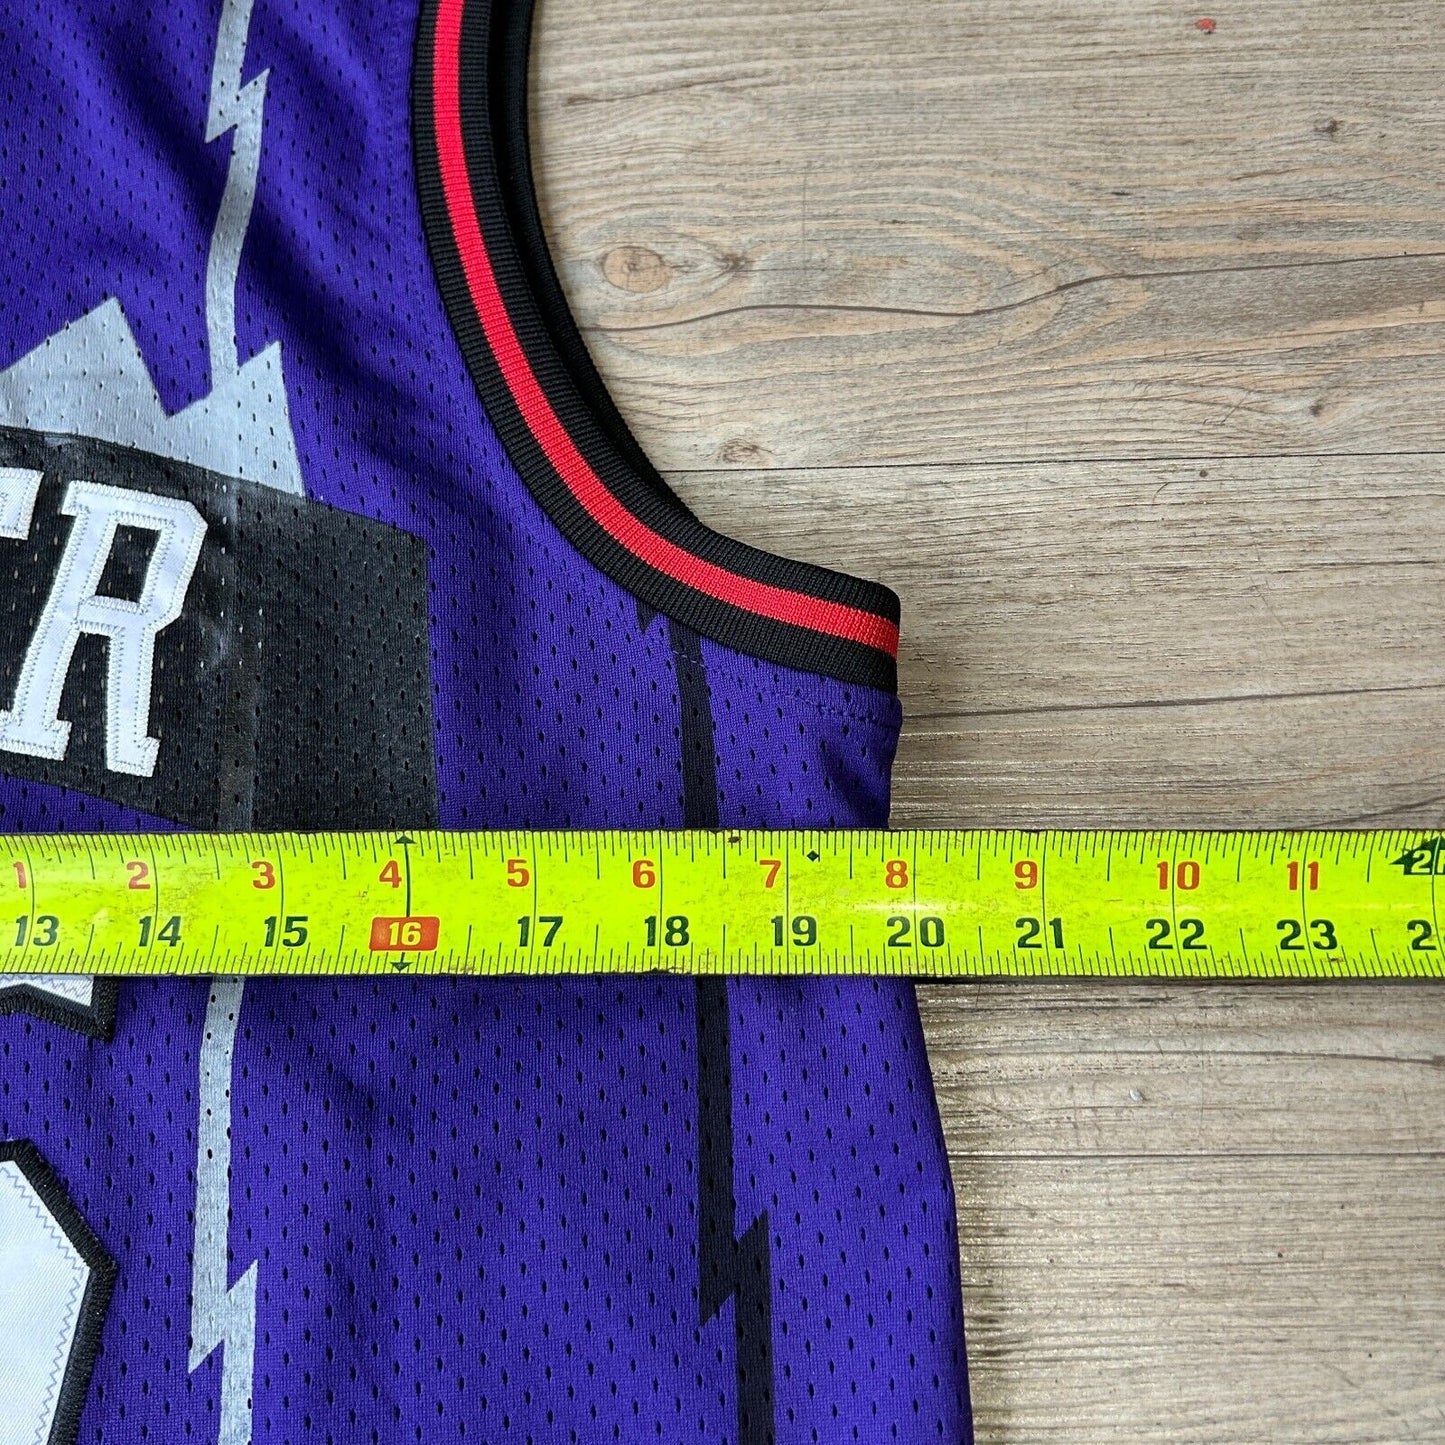 VINTAGE | Toronto Raptors #15 Carter NBA NIKE Basketball Jersey sz S Adult